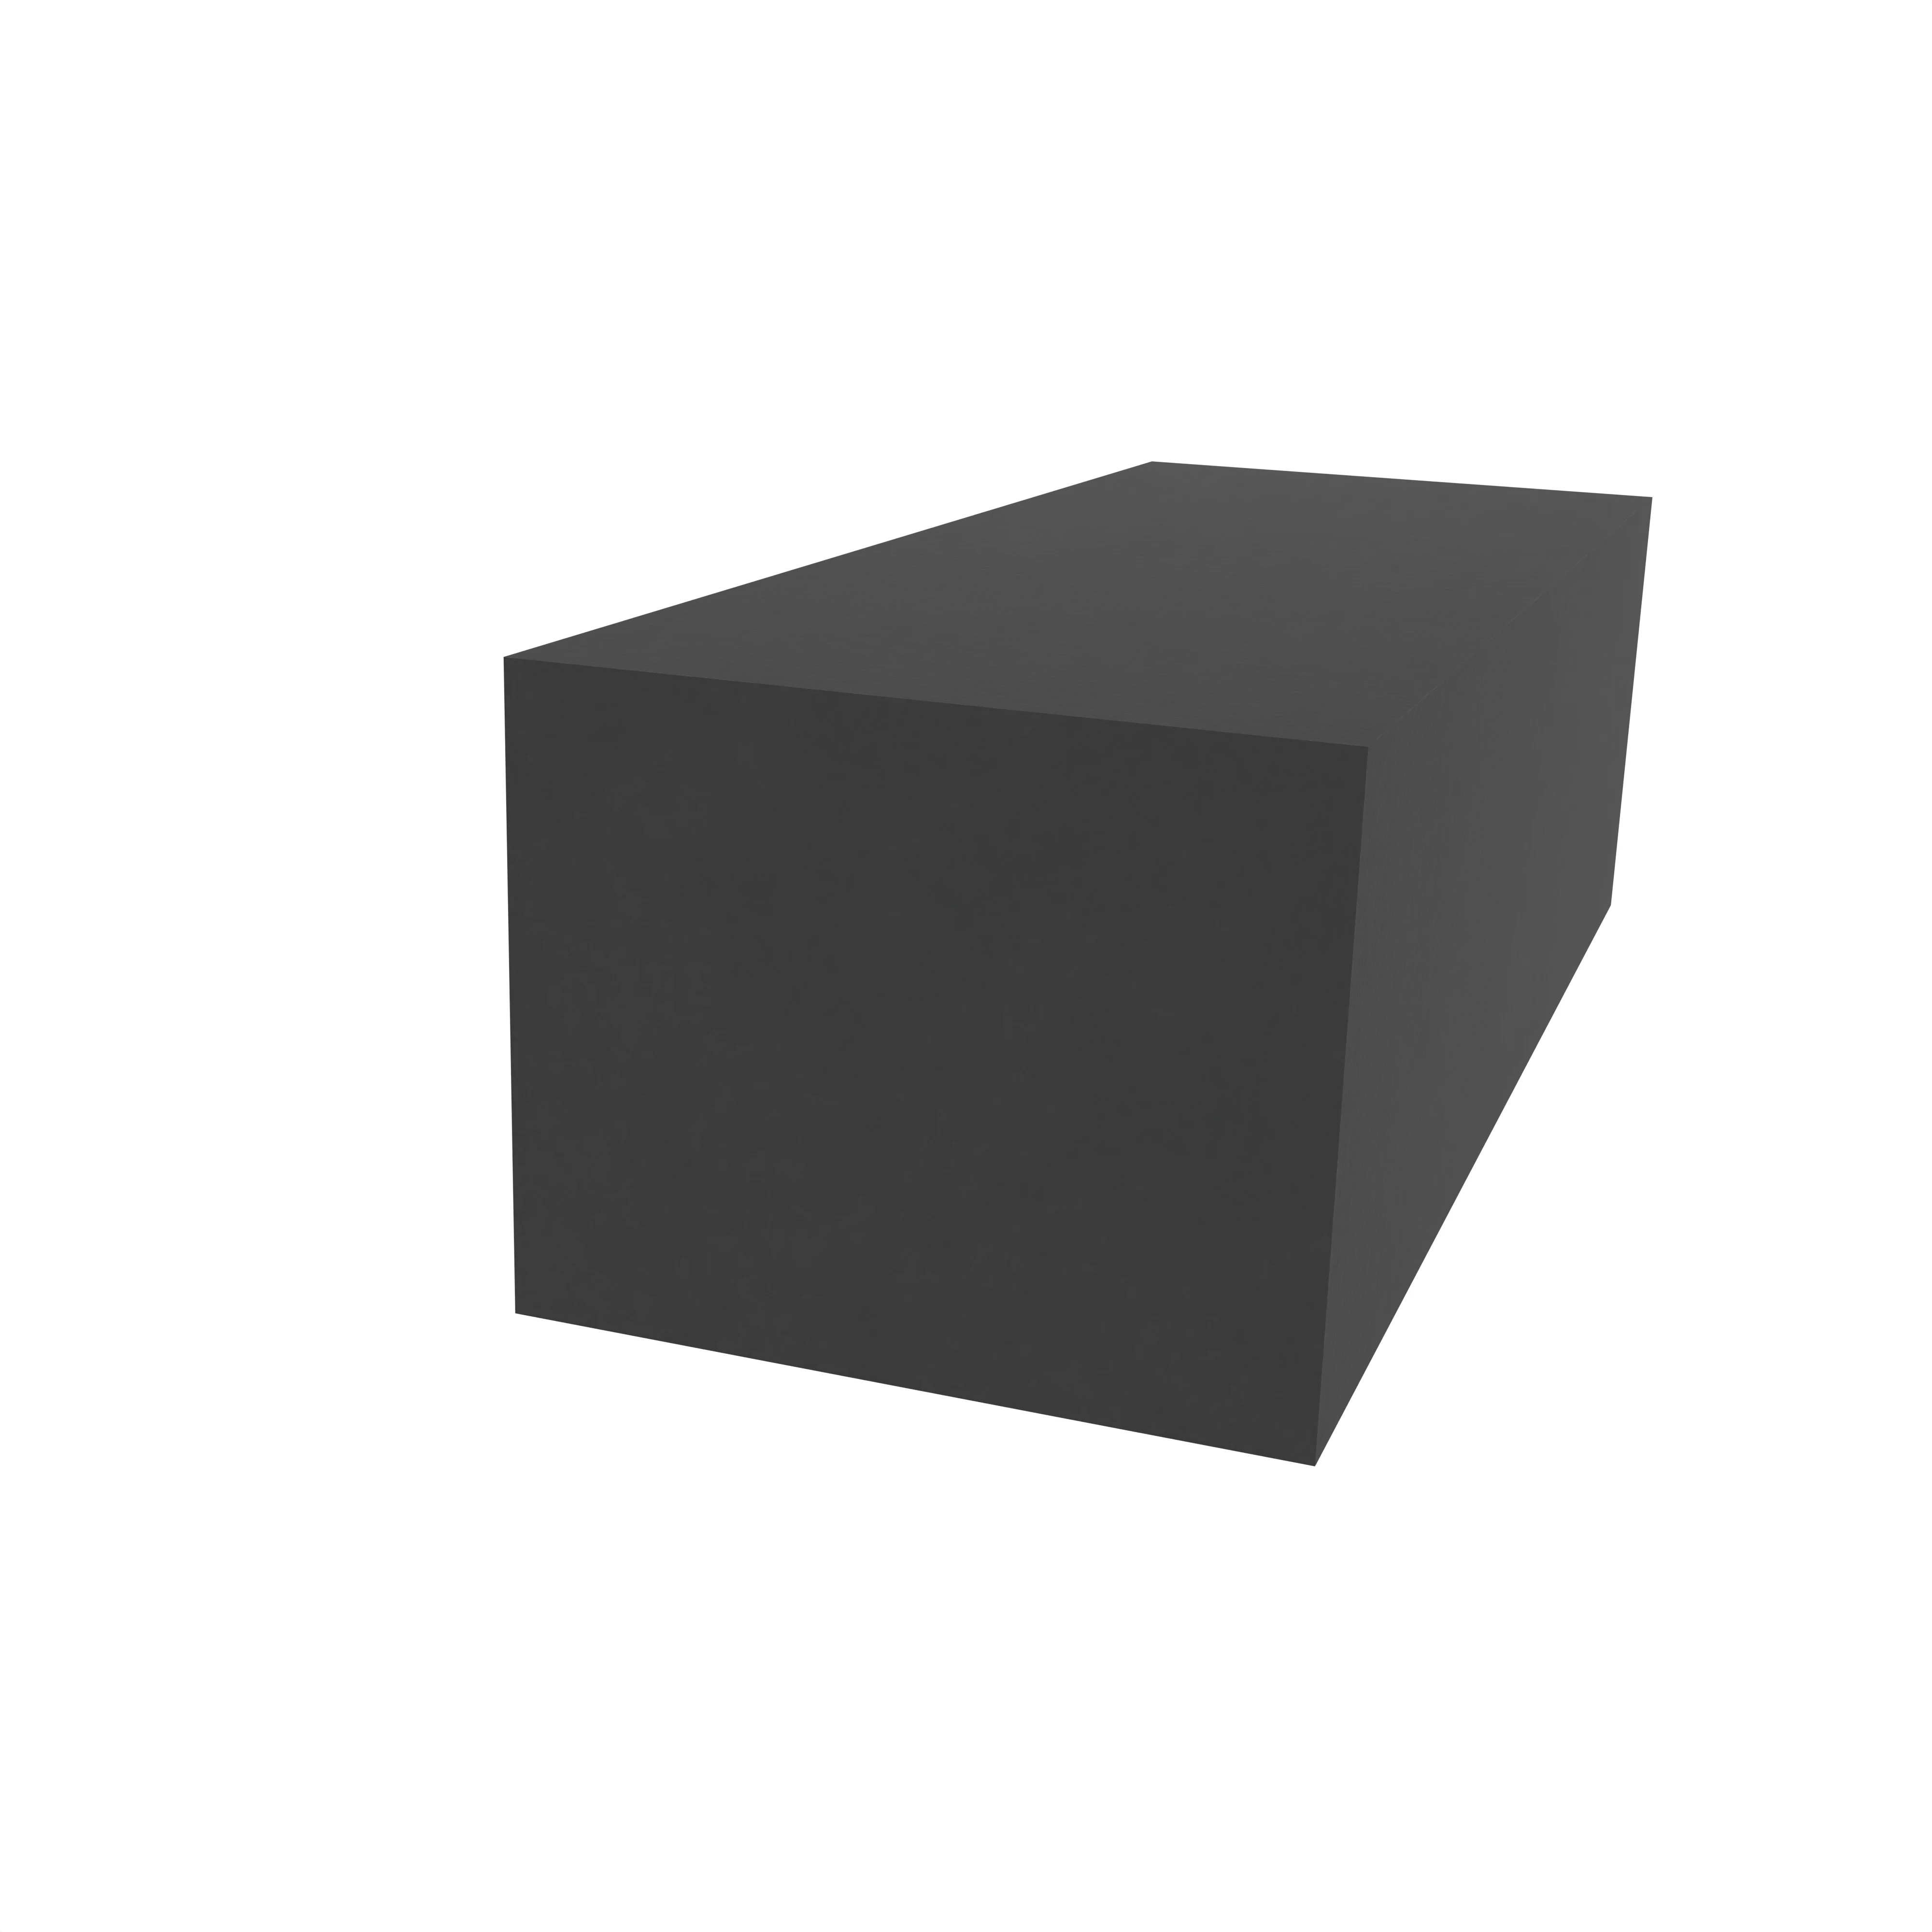 Moosgummidichtung vierkant | 12 mm Höhe | Farbe: schwarz